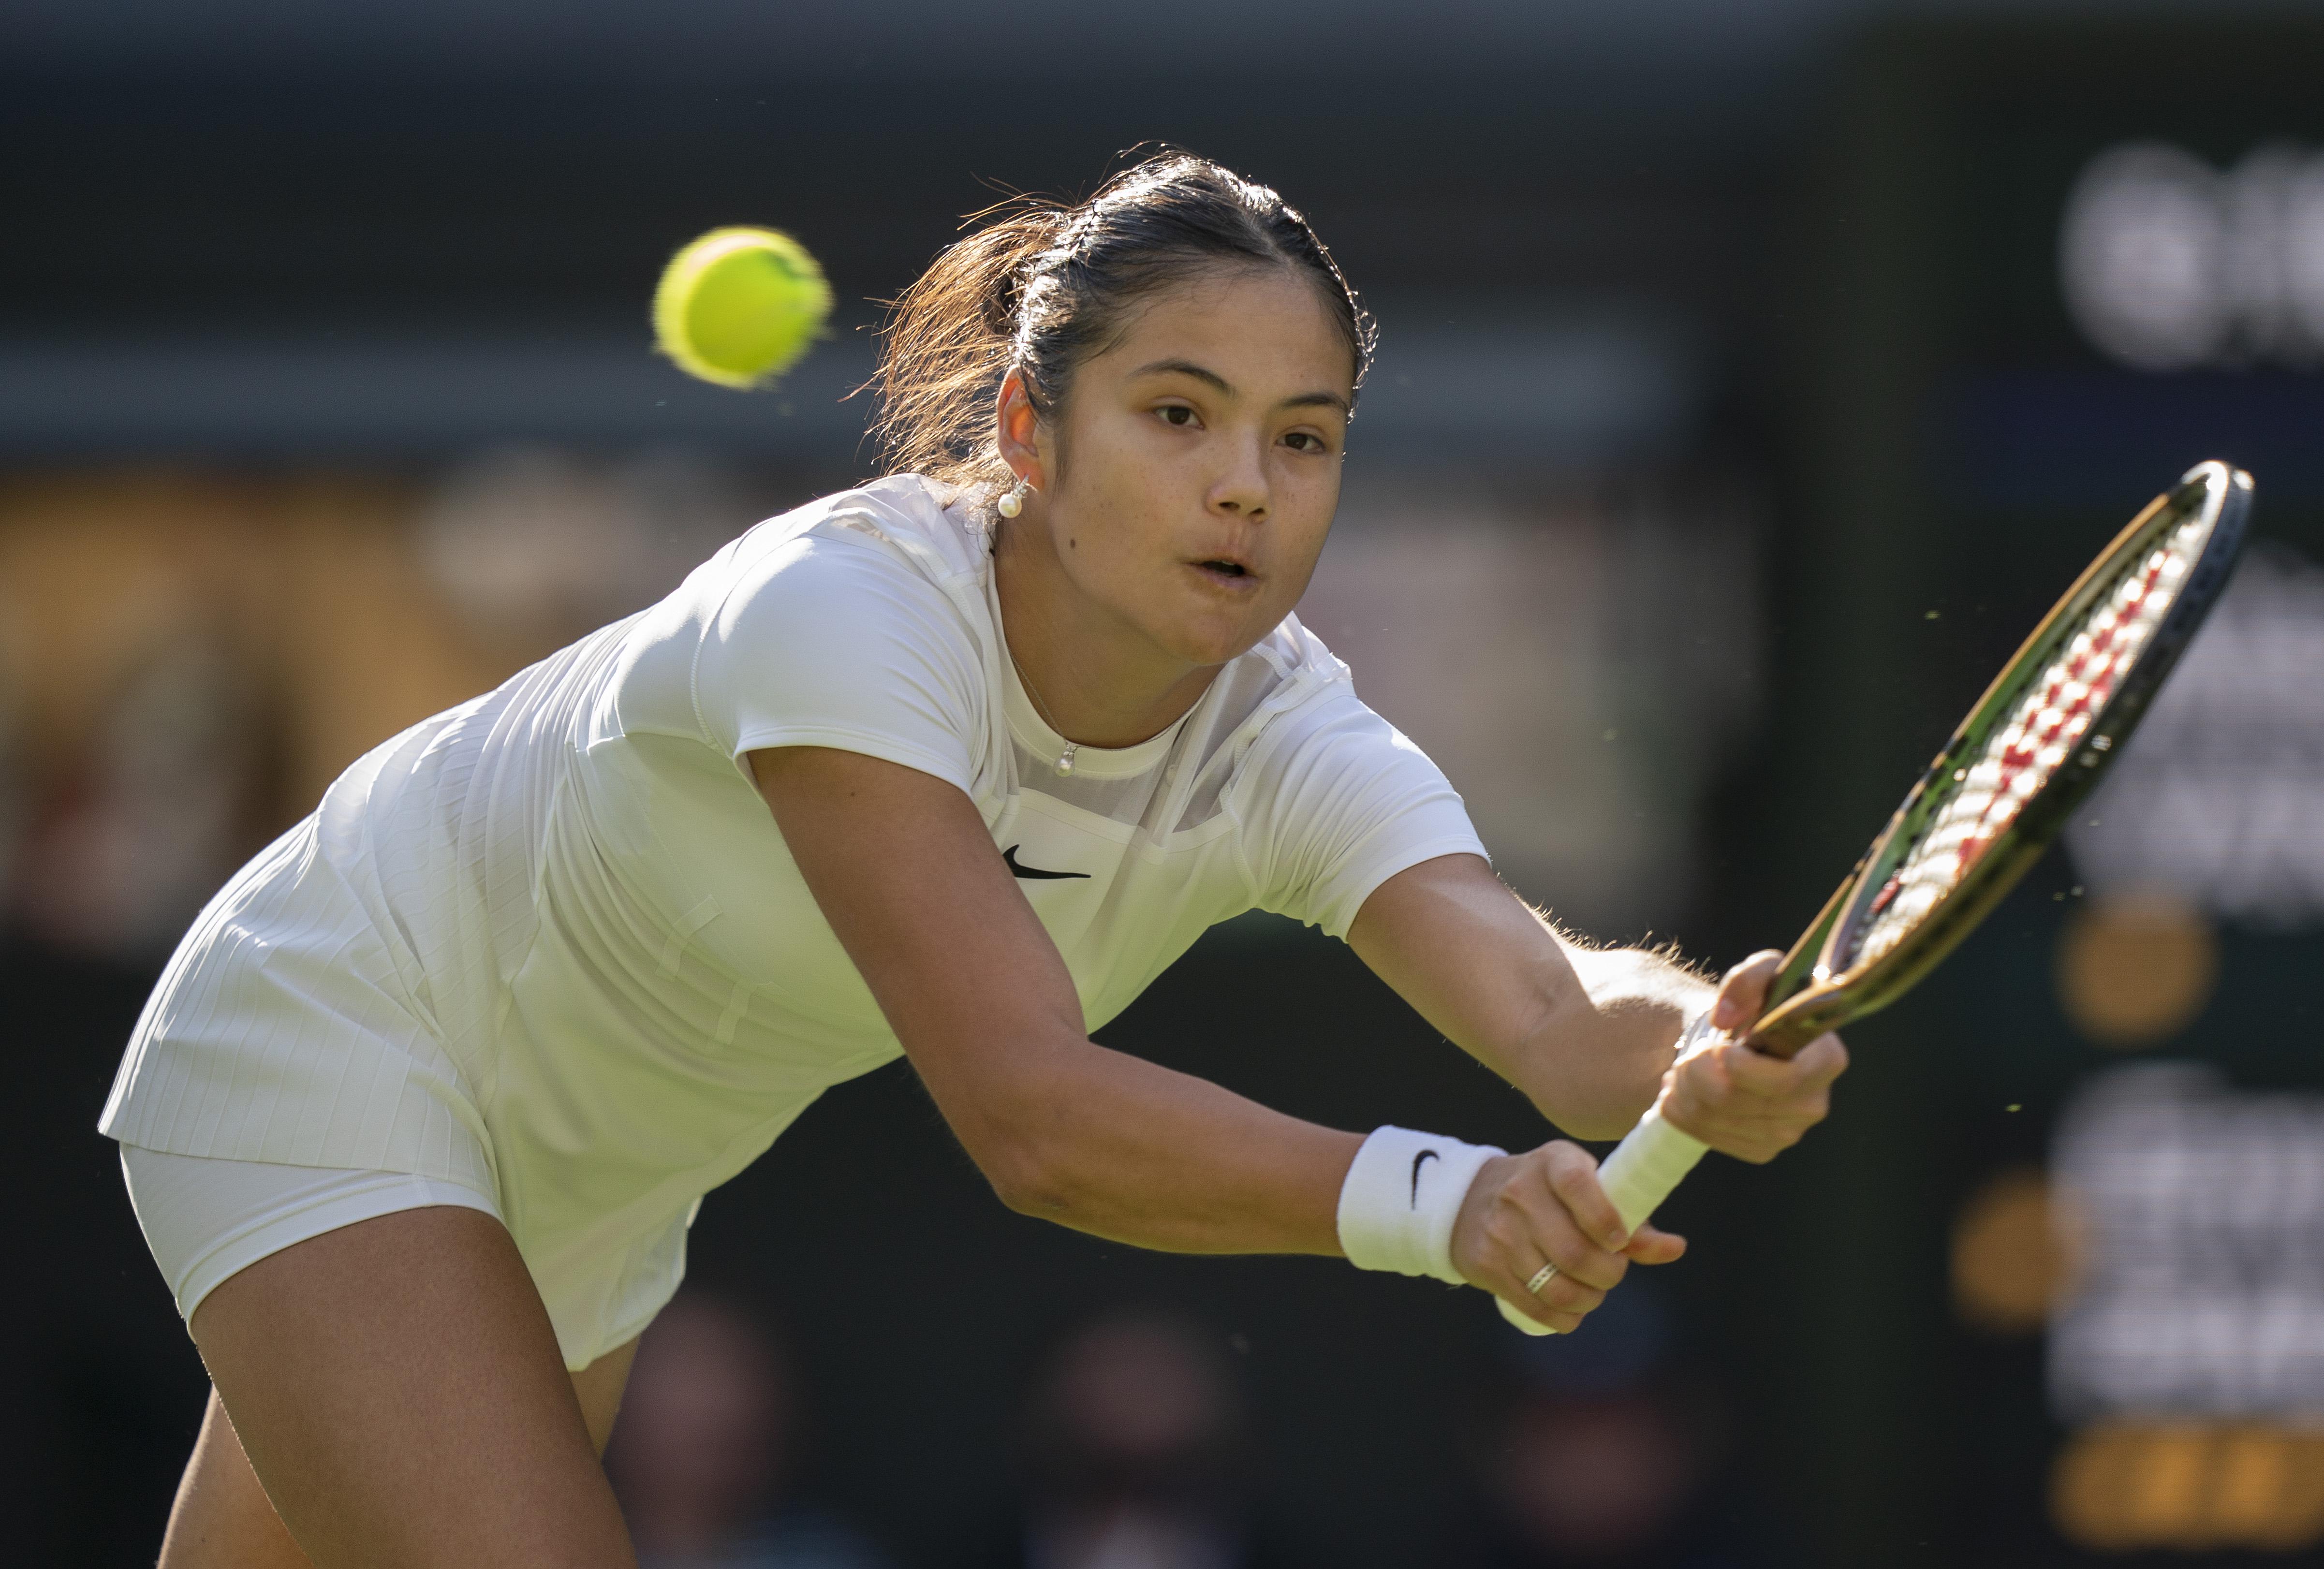 Caroline Garcia vs Emma Raducanu Odds, Prediction and Betting Trends for 2022 Wimbledon Women's Round 2 Match